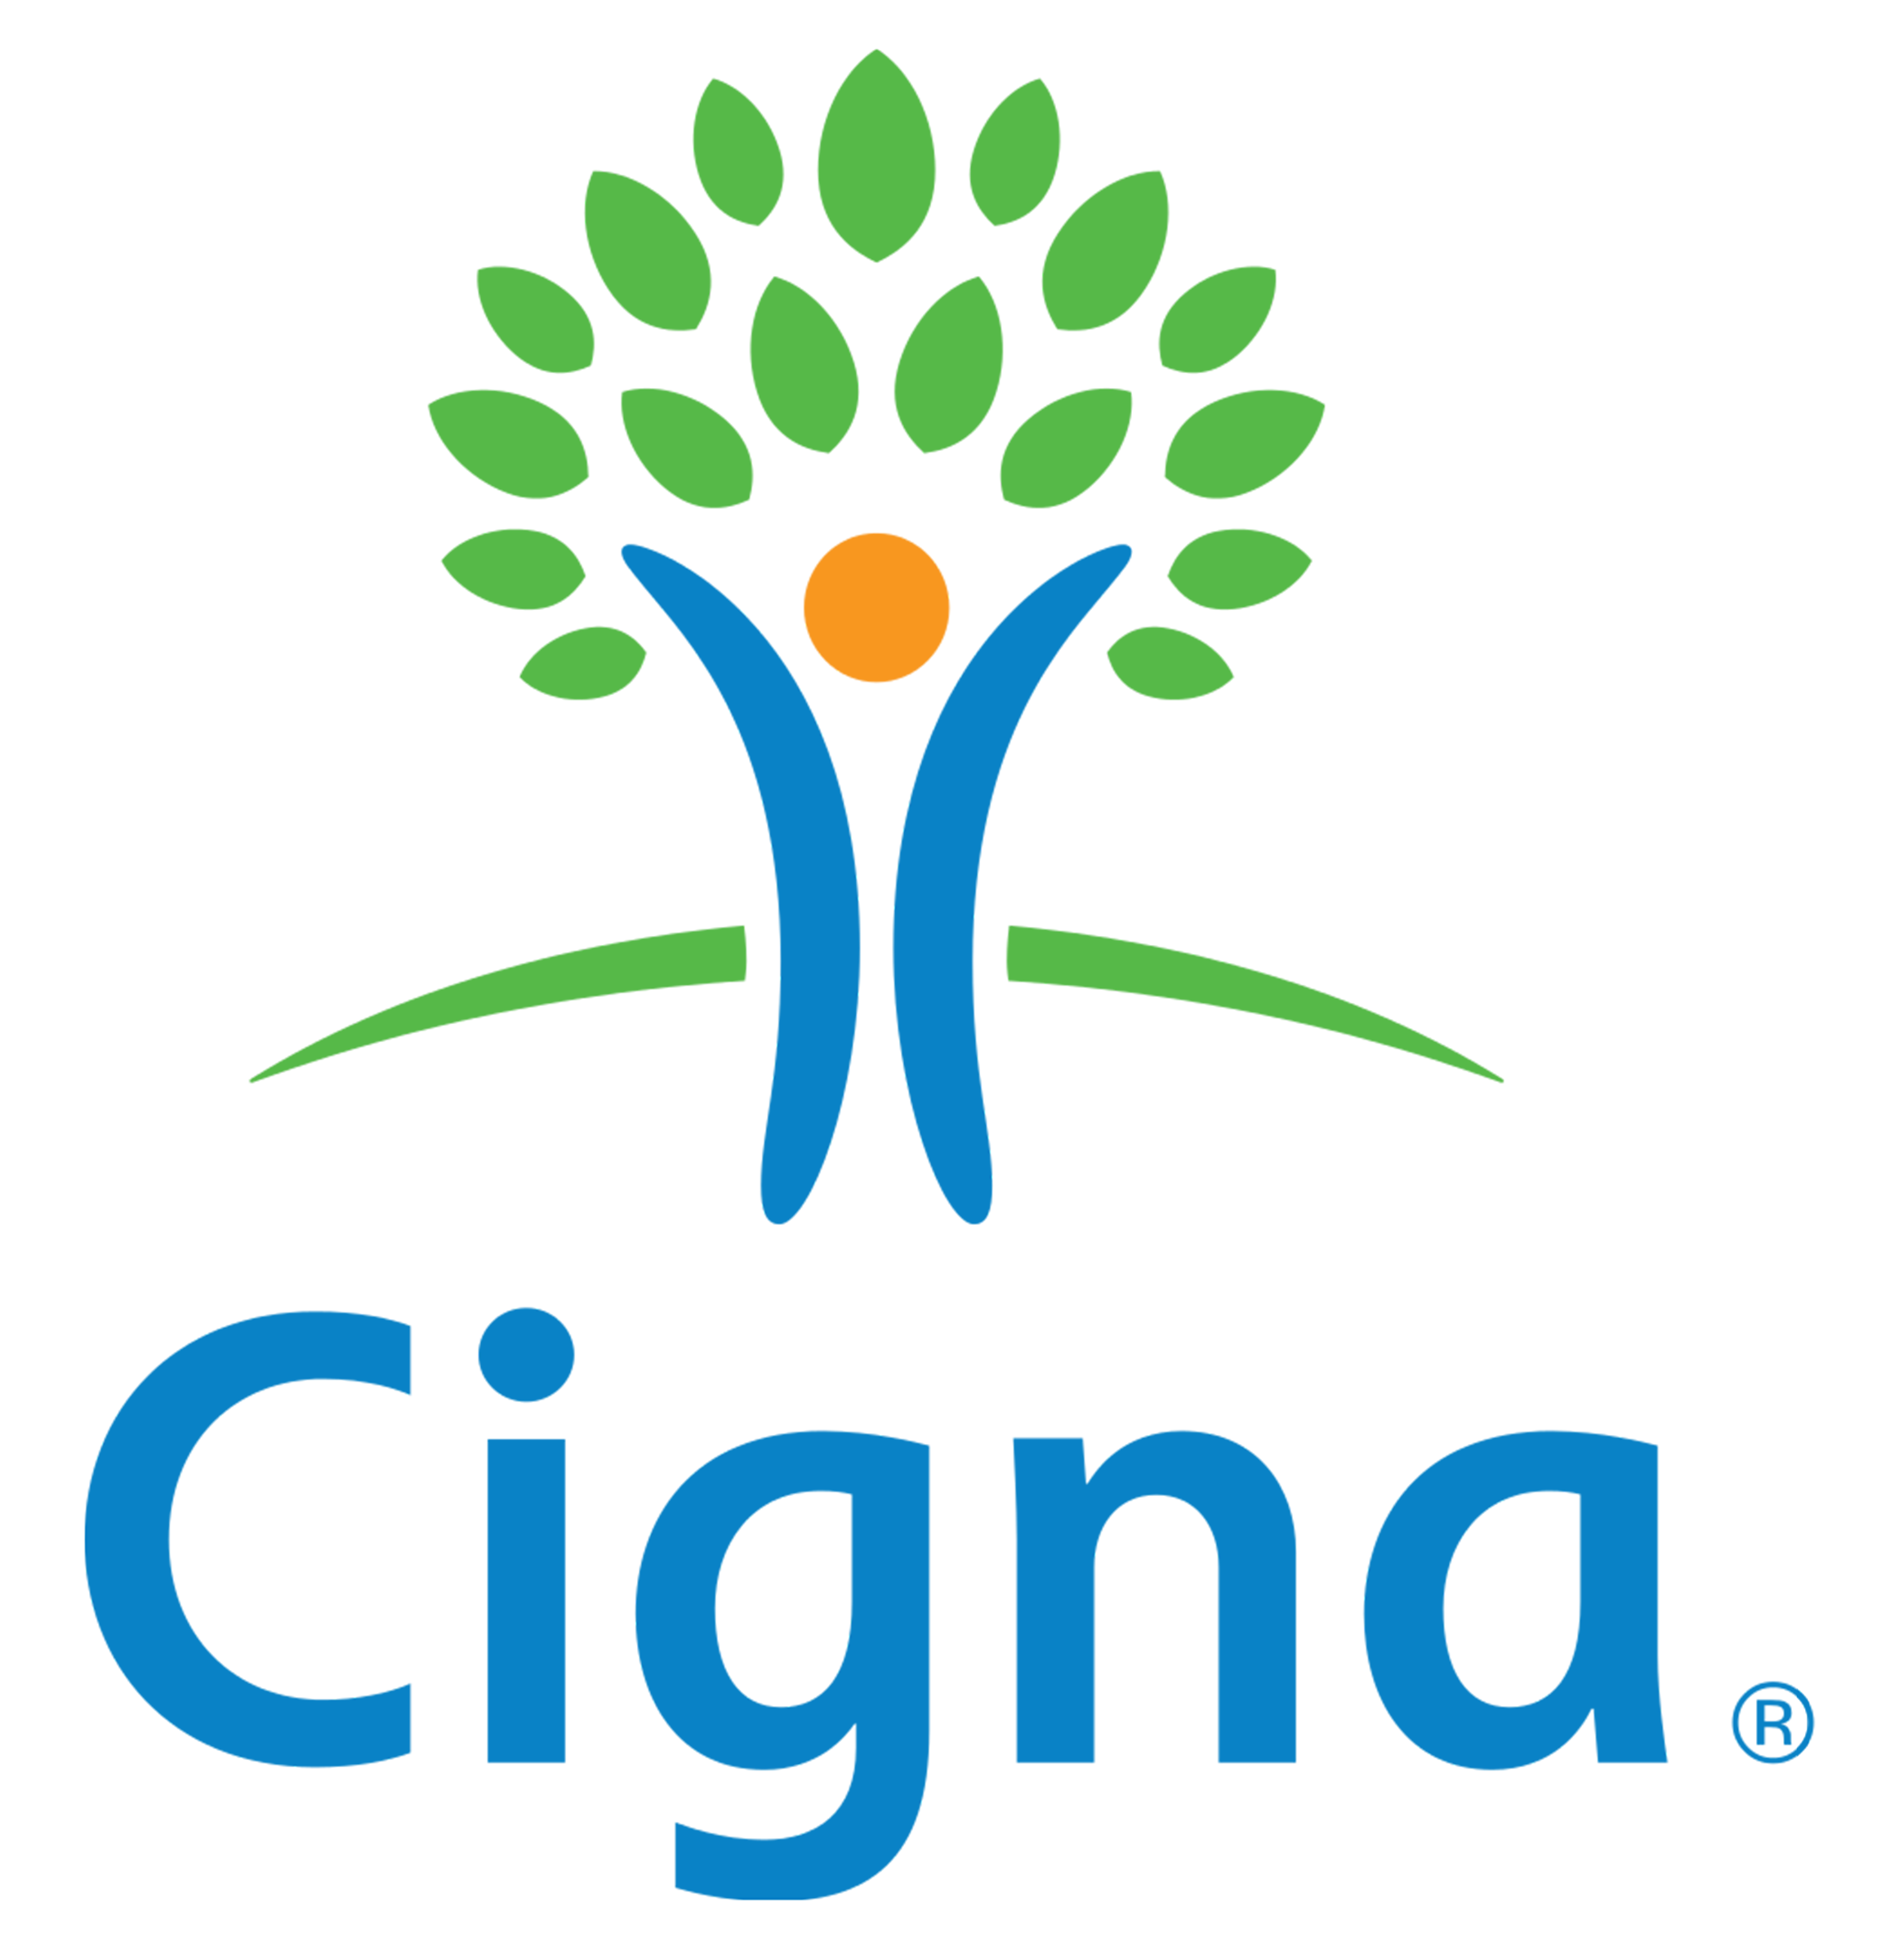 kisspng-cigna-logo-health-care-company-insurance-cigna-logo-5a755111a0d688.2736536615176379056588.png